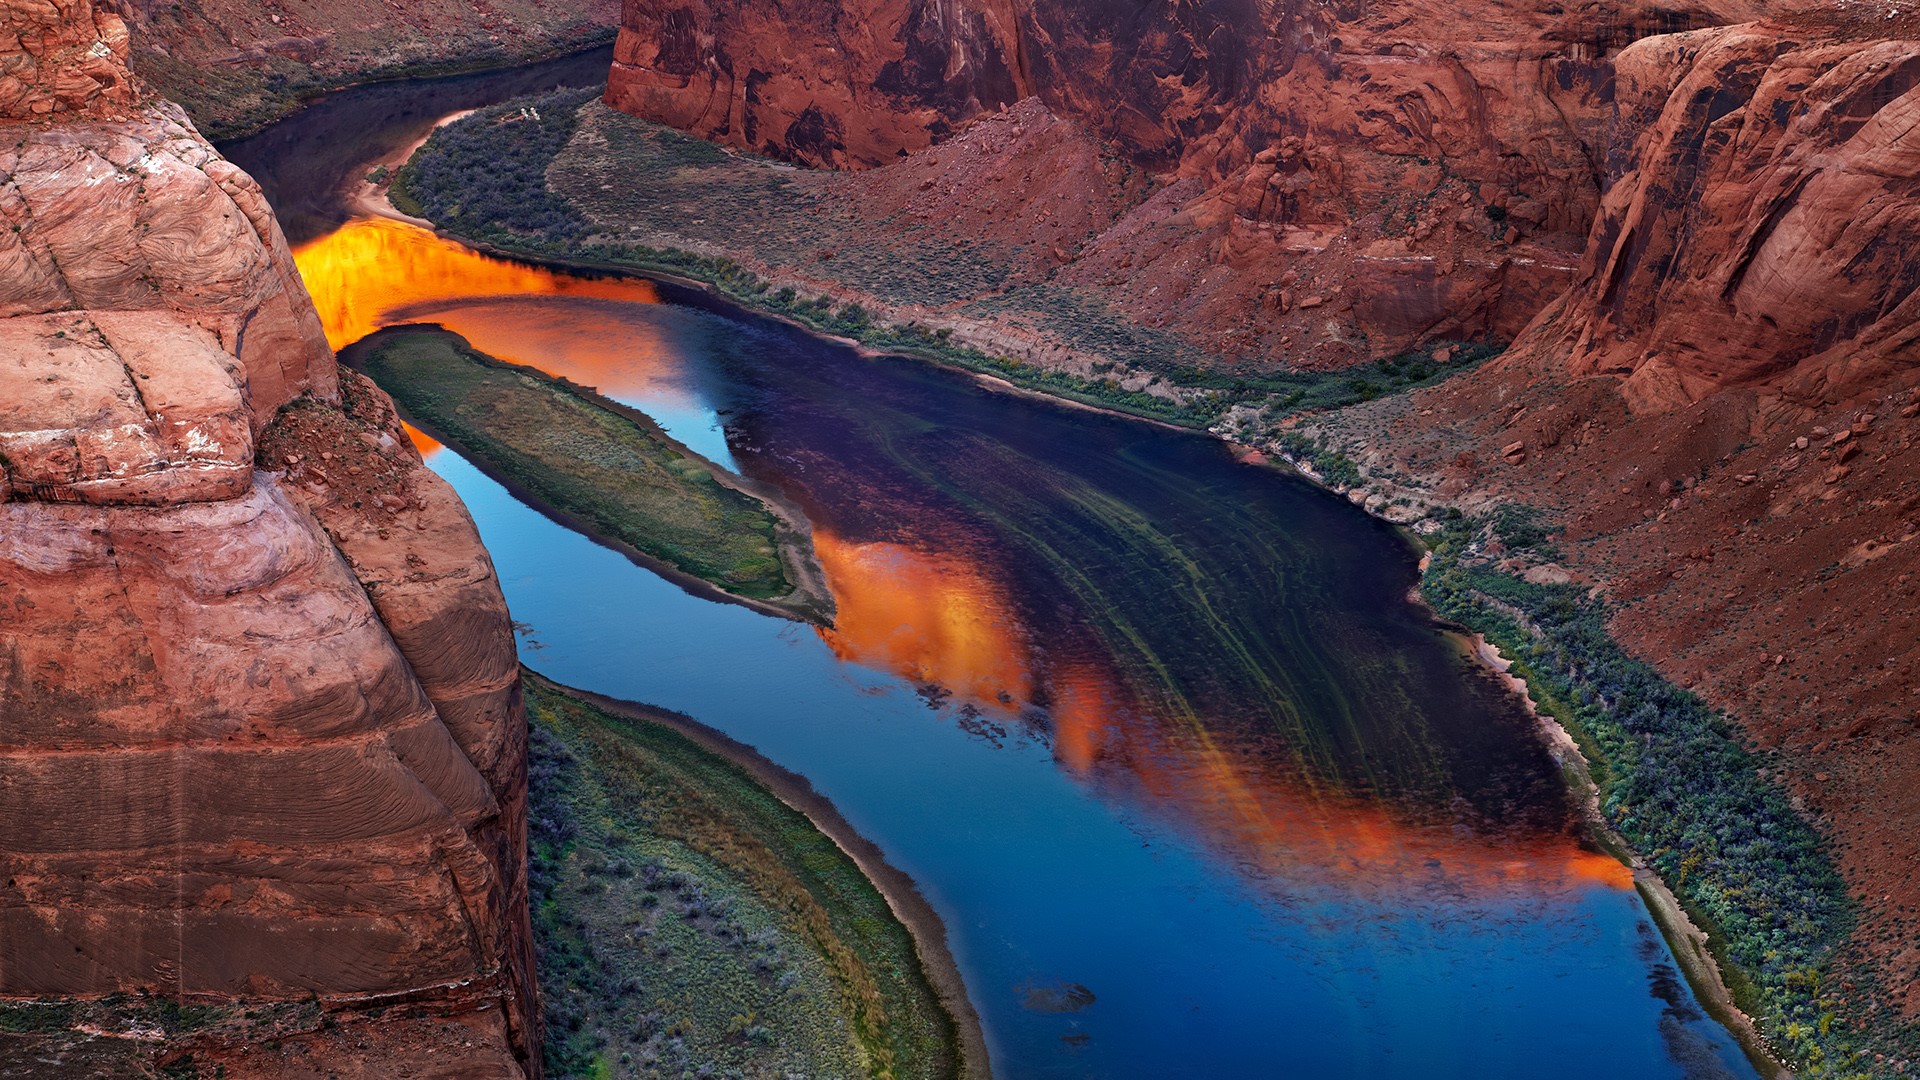 Colorado River, Arizona 1920x1080.jpg